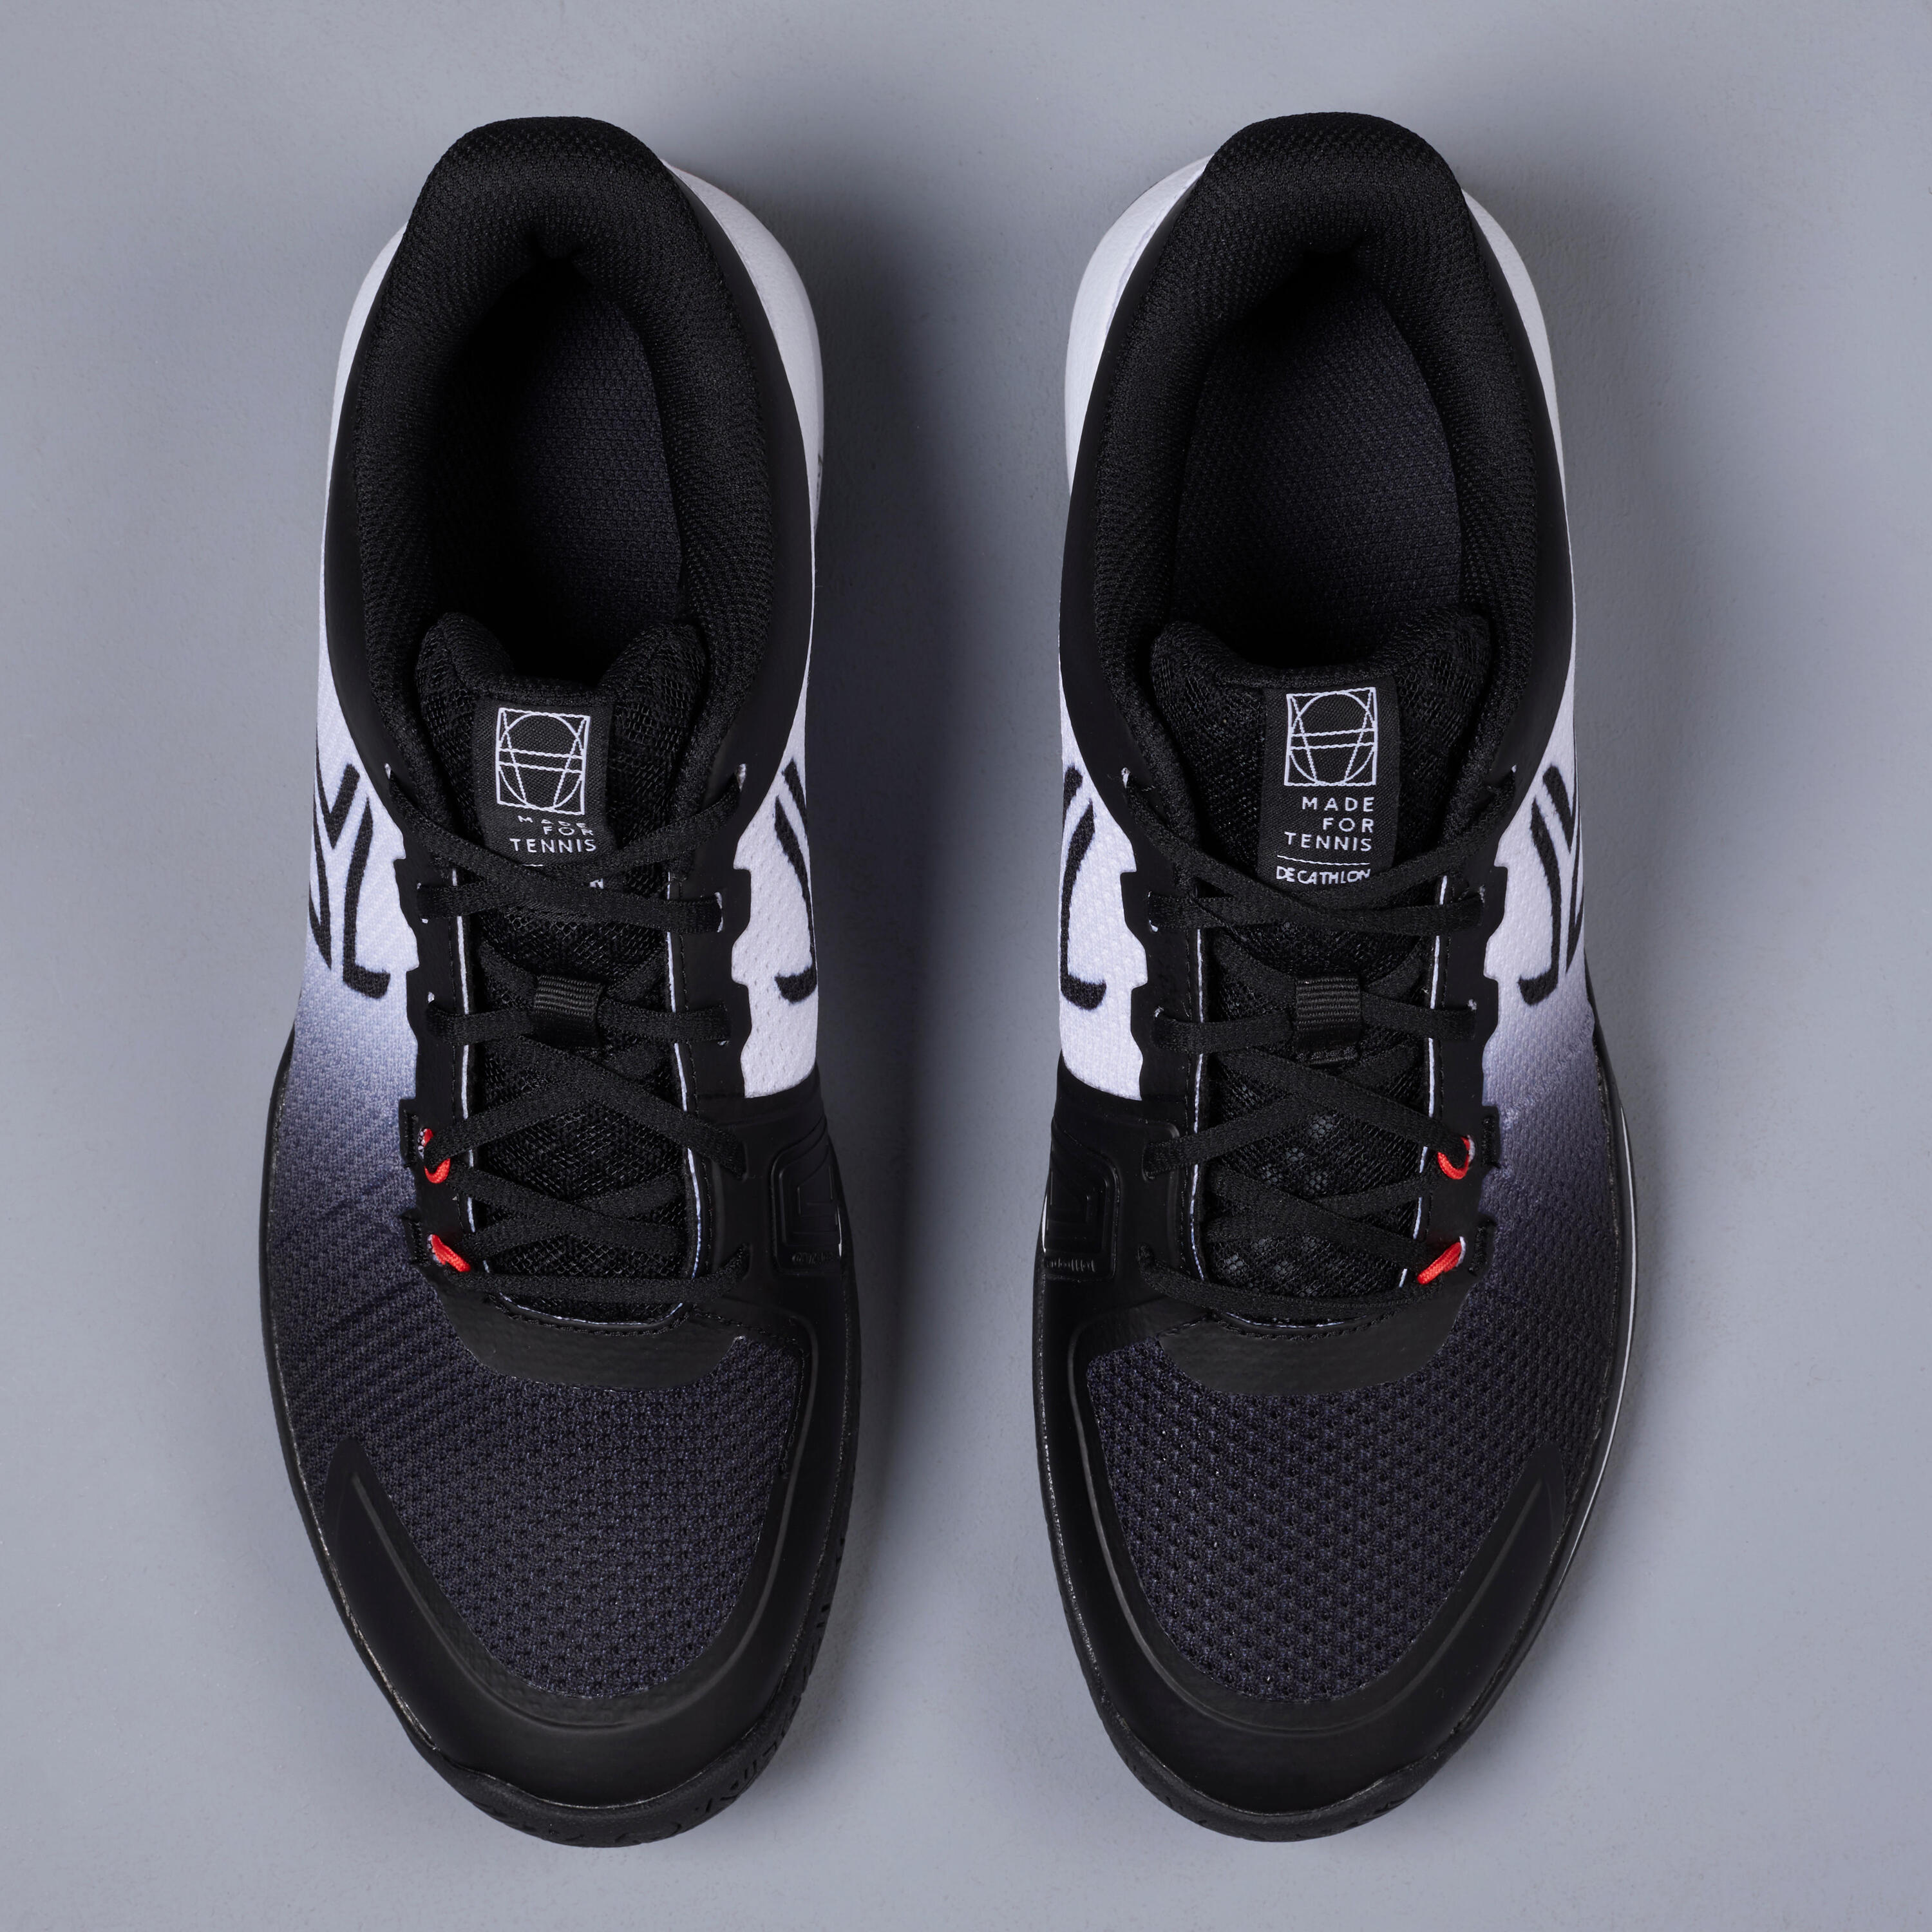 Men's Multi-Court Tennis Shoes TS590 - White/Black 5/8